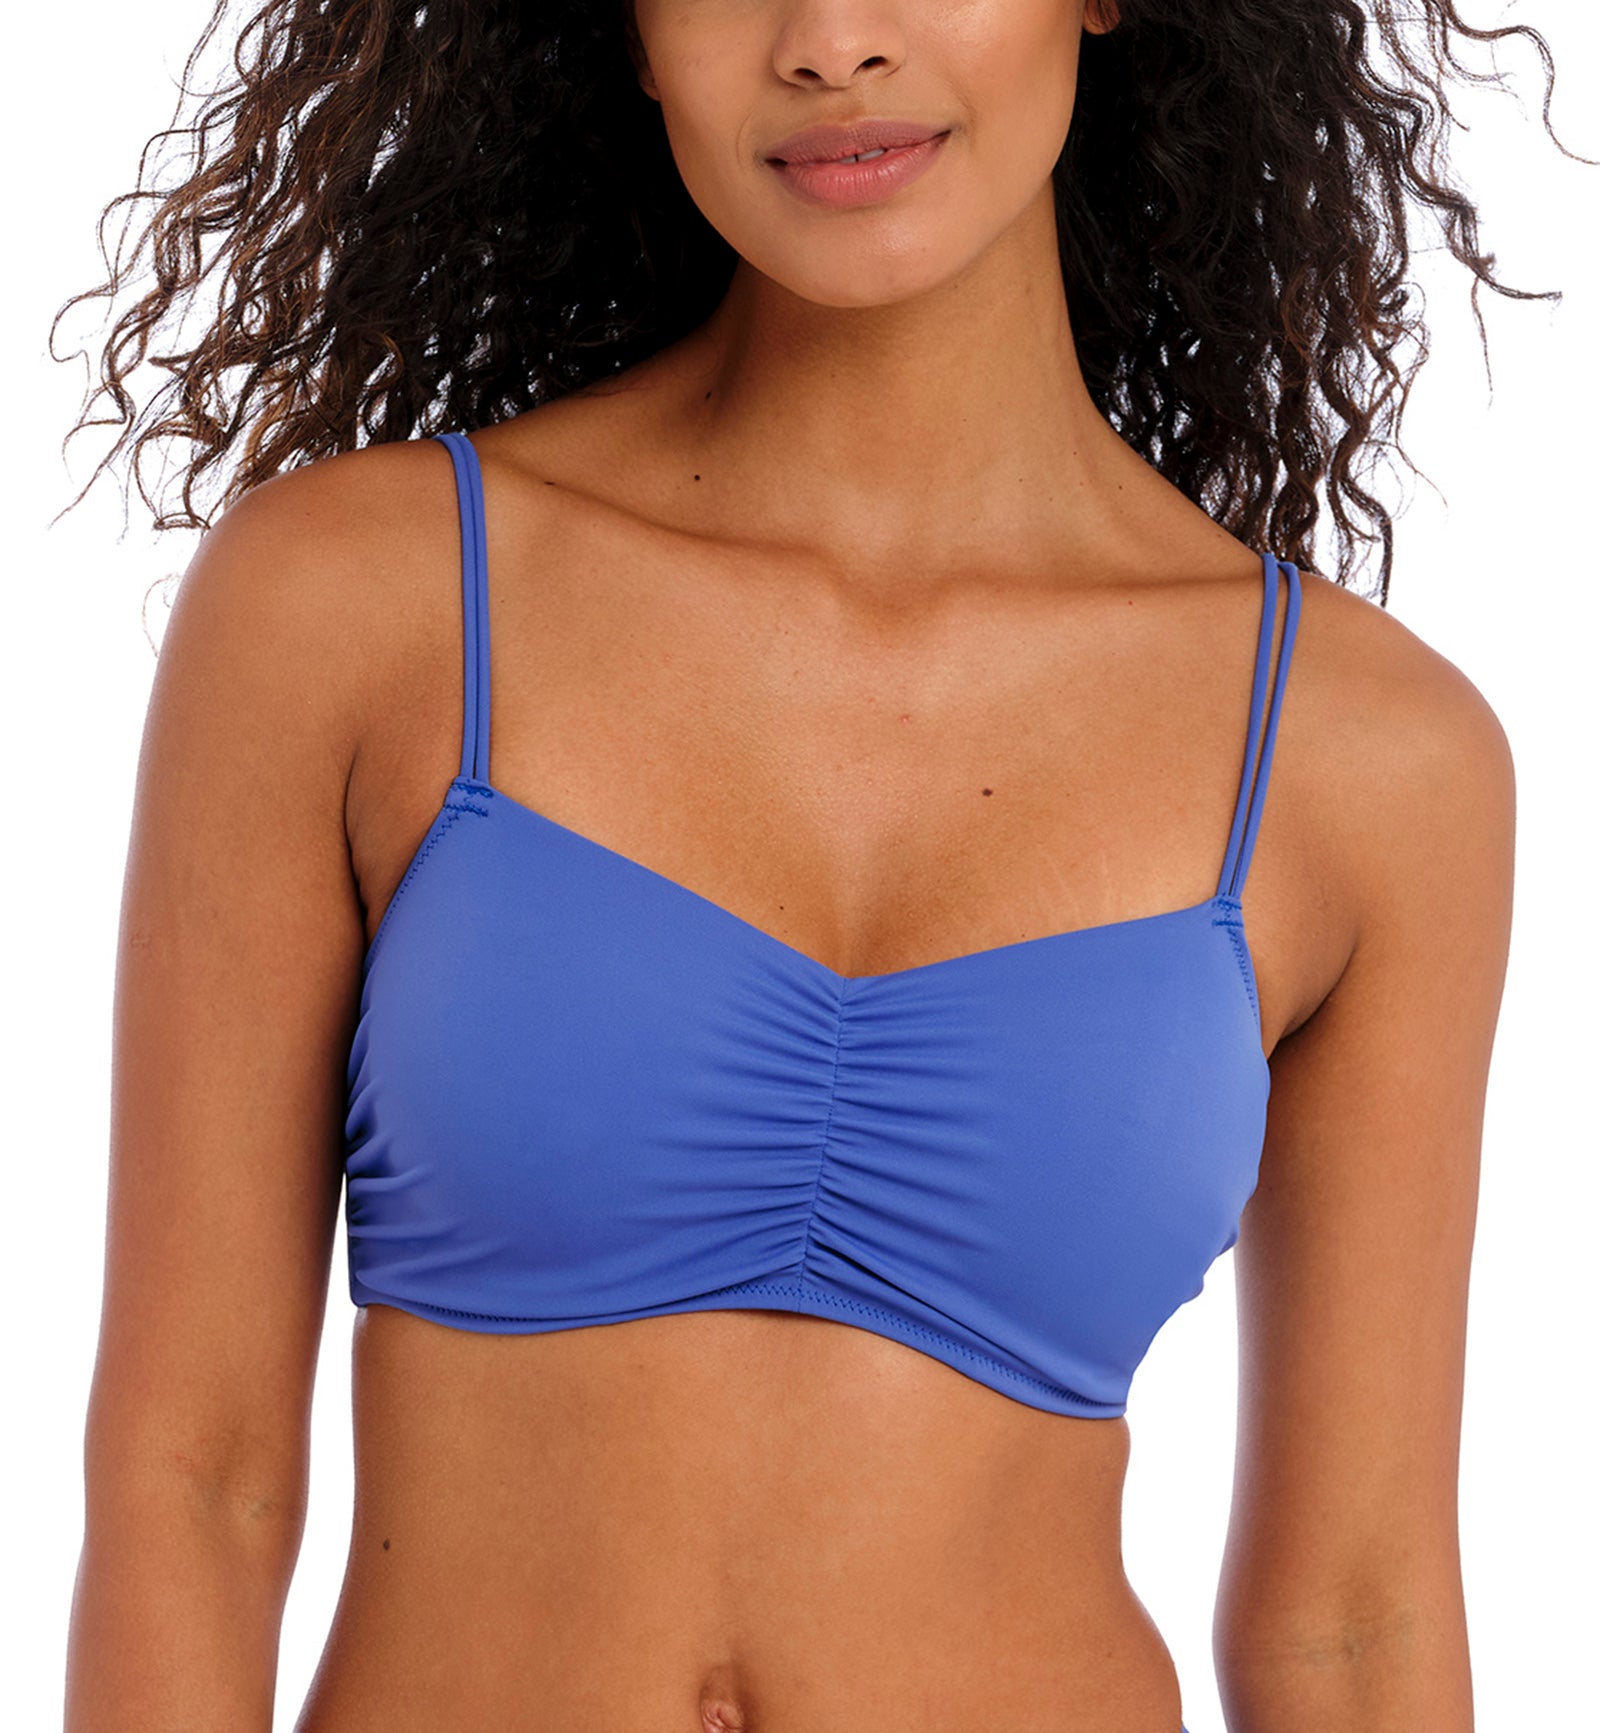 Freya Jewel Cove Convertible Underwire Bralette Bikini Top (7239),30D,Plain Azure - Plain Azure,30D